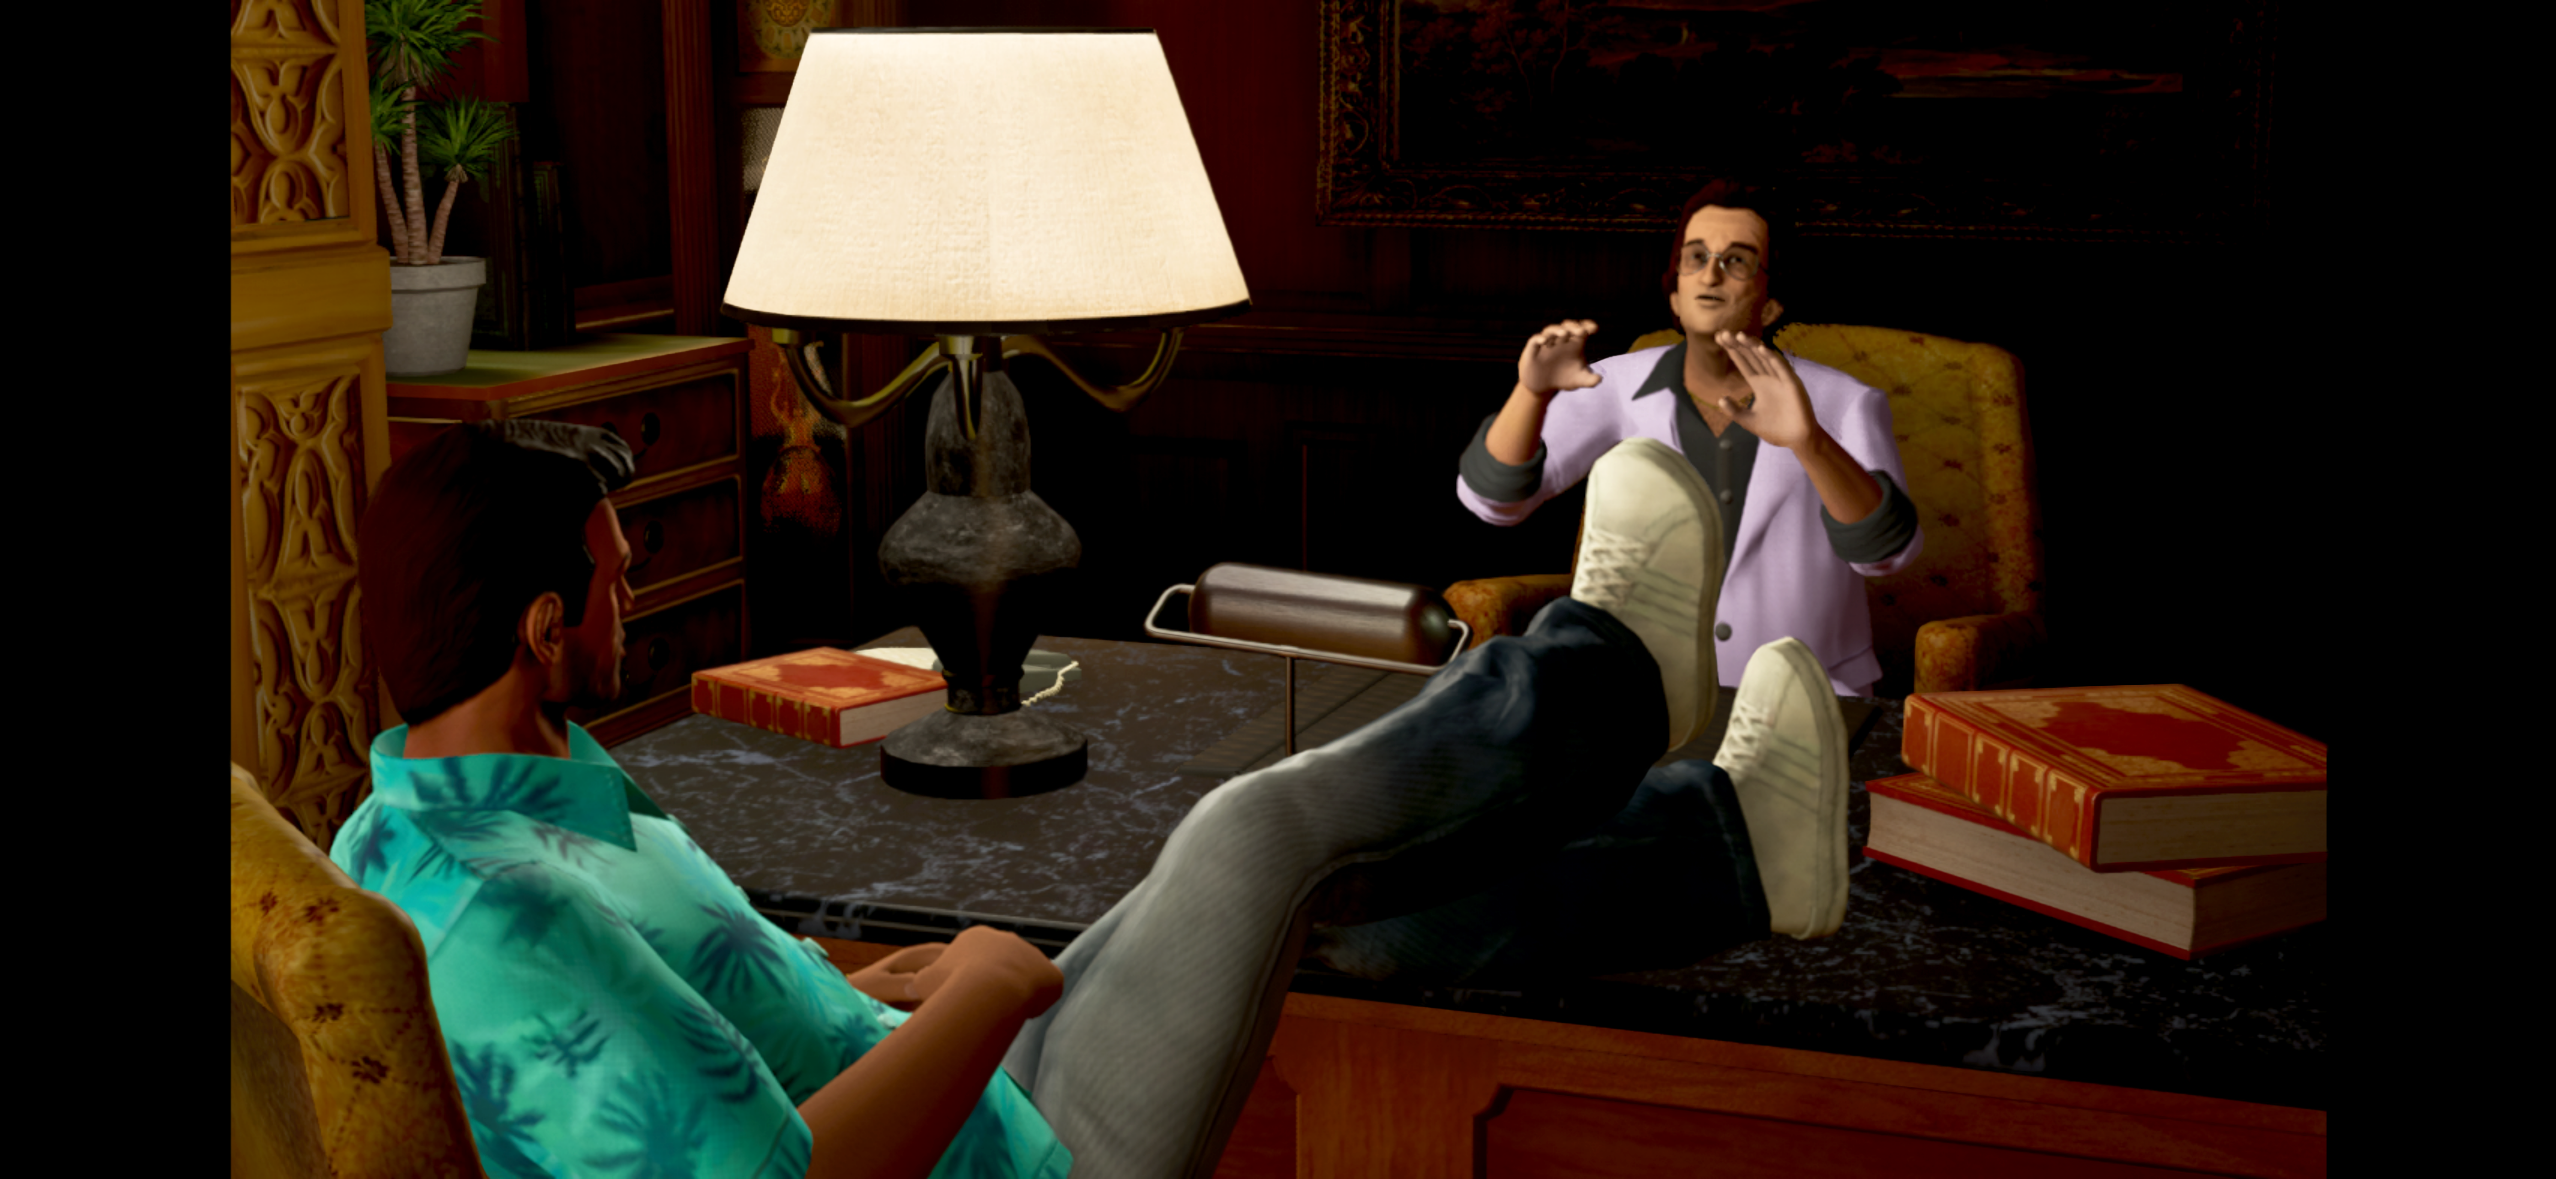 Screenshot 1 of GTA: Vice City - အဓိပ္ပာယ်သတ်မှတ်ချက် 